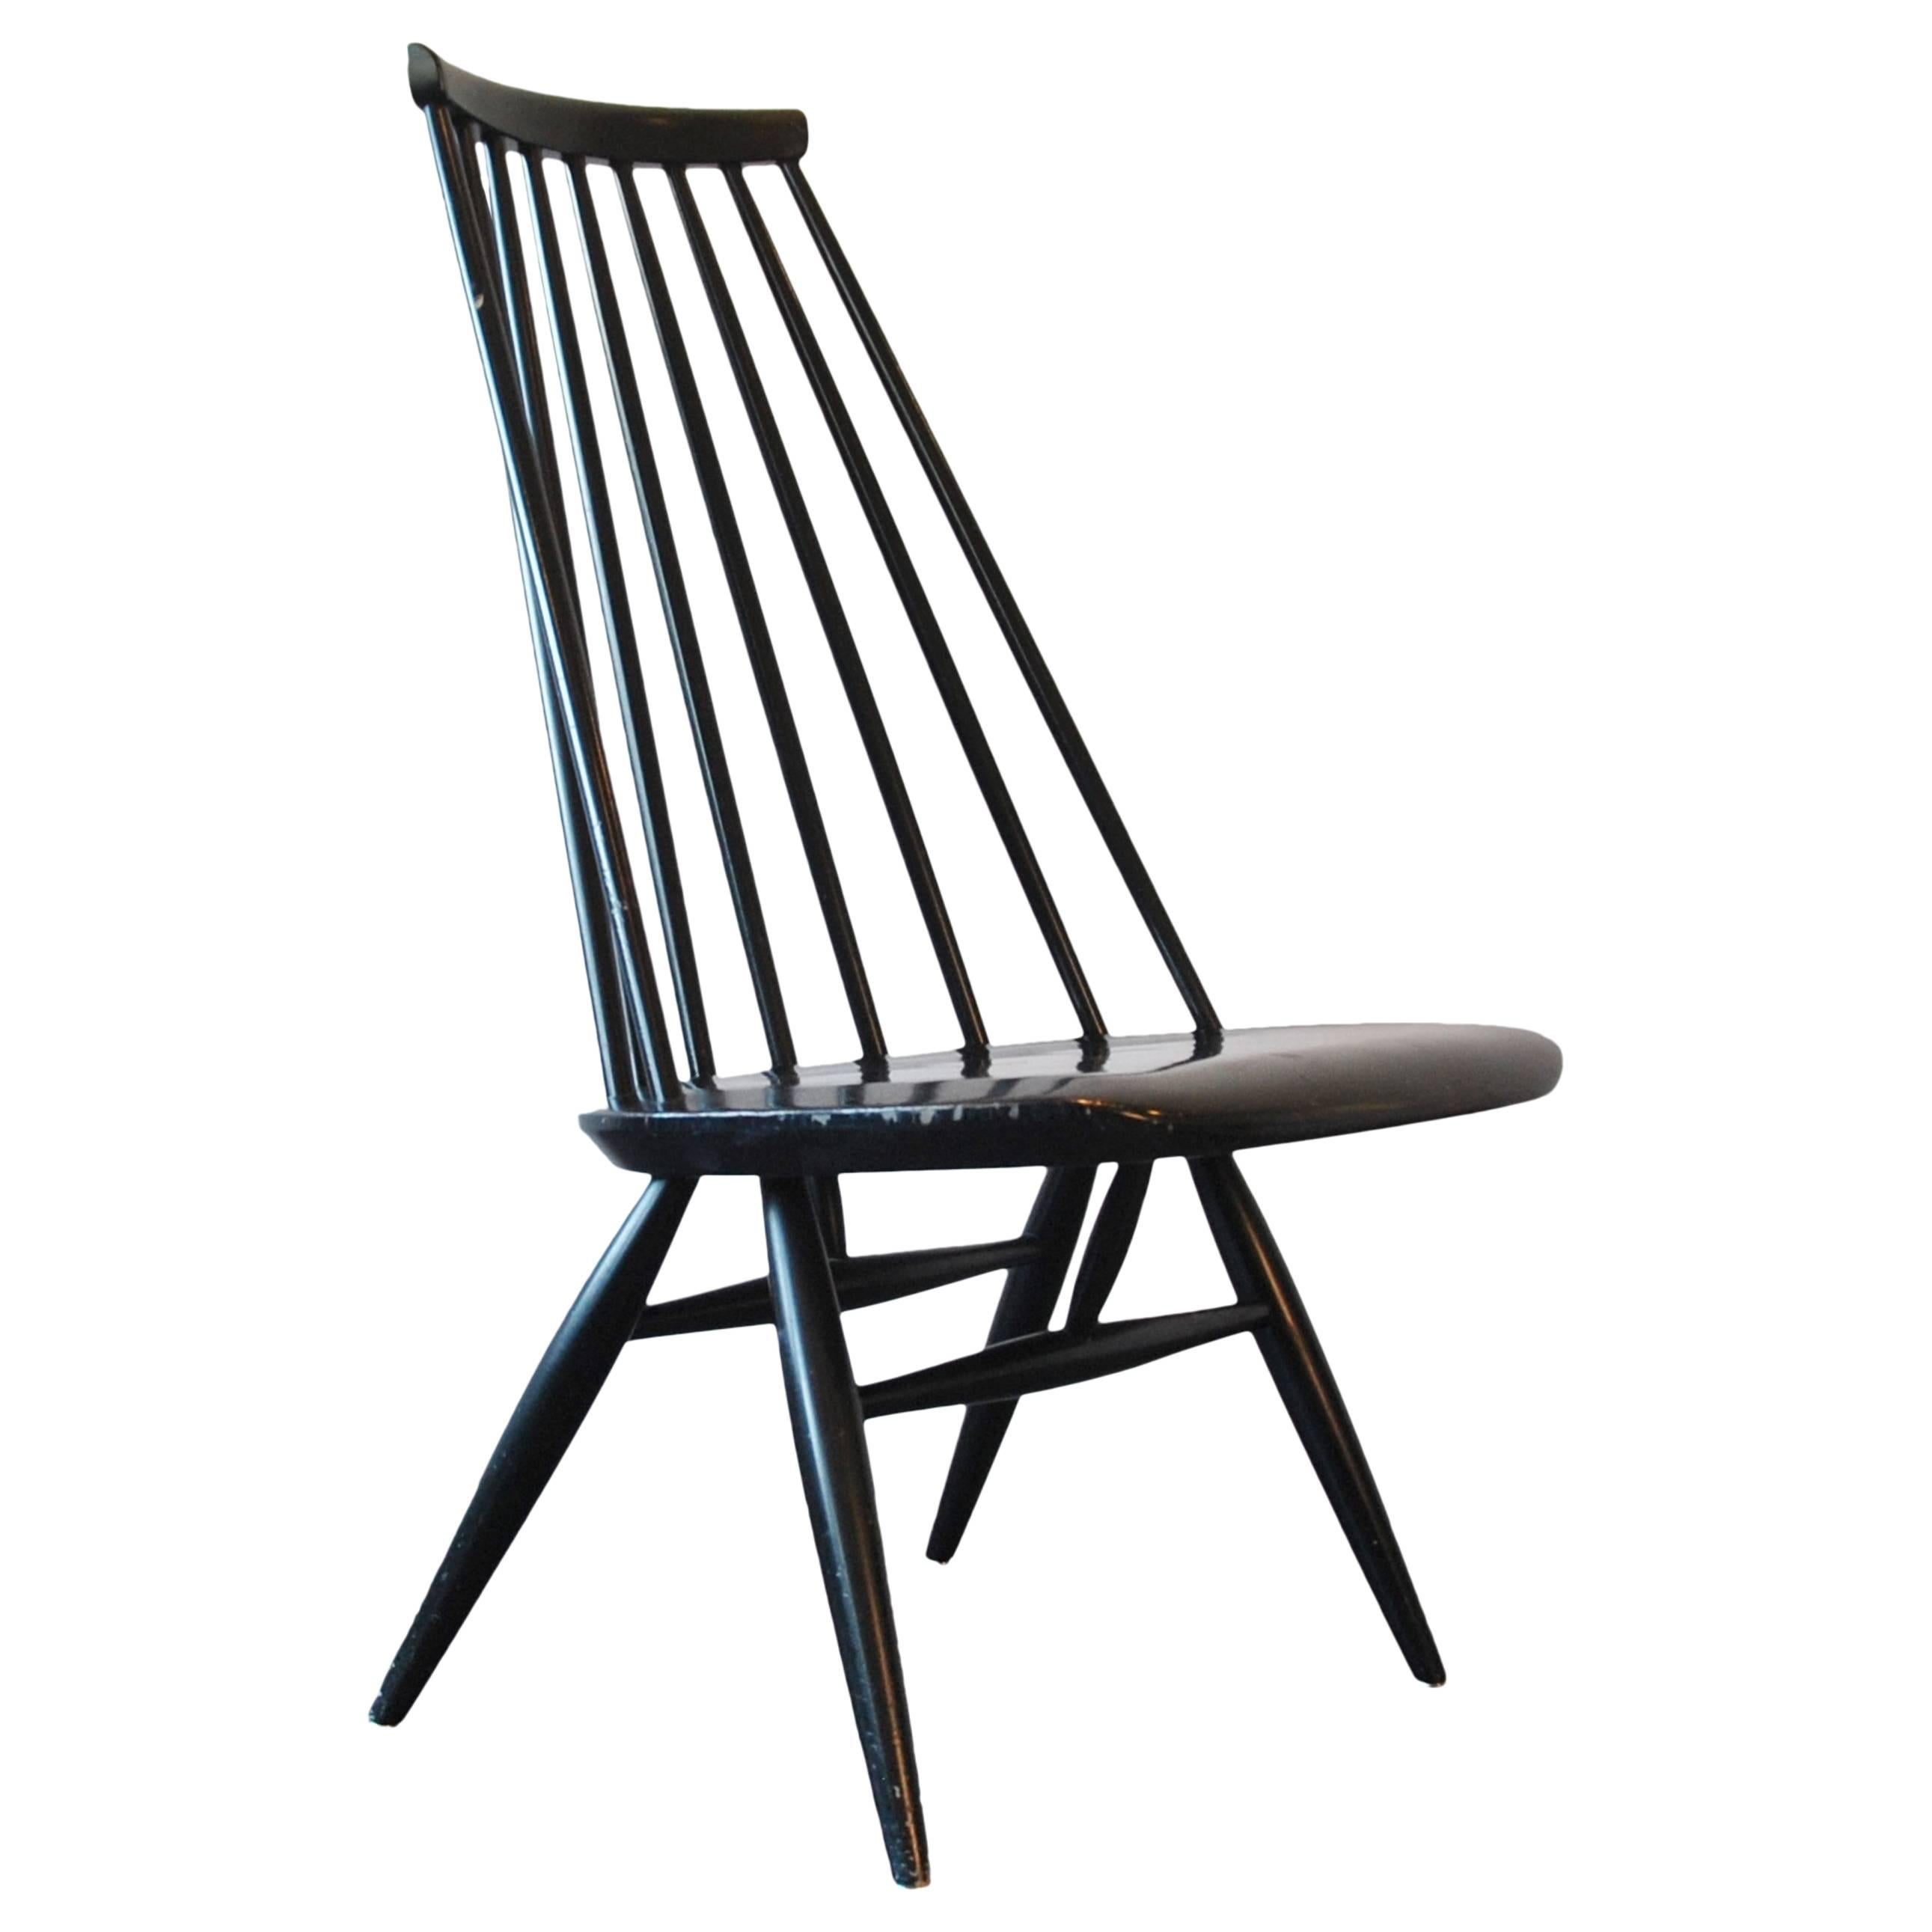 'Mademoiselle' Lounge Chair by Ilmari Tapiovaara for Edsby Verken, Marked 1958